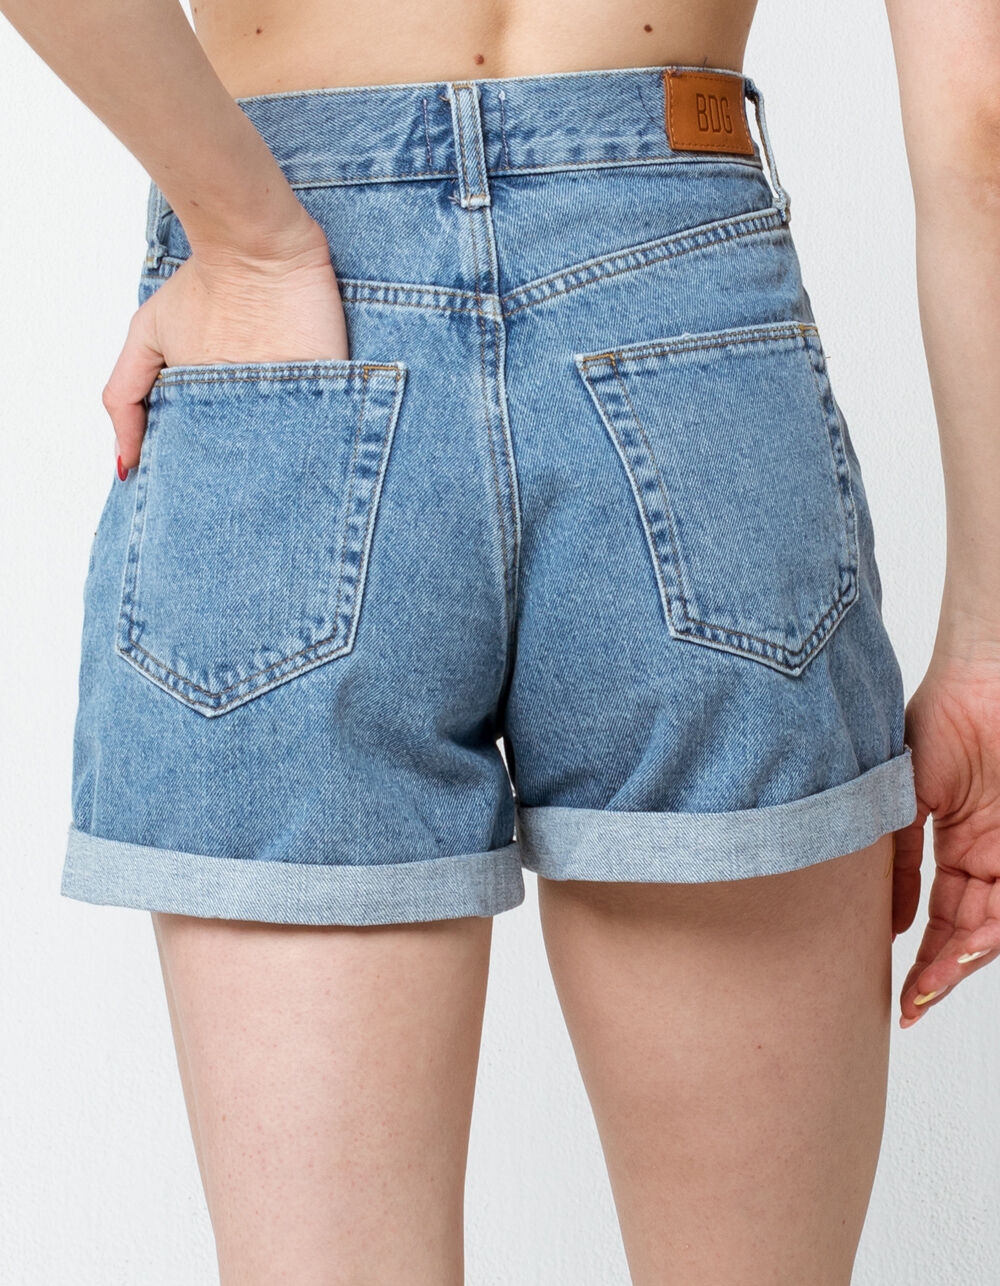 BDG Urban Outfitters Rolled Hem Womens Mom Shorts - DARK VINTAGE